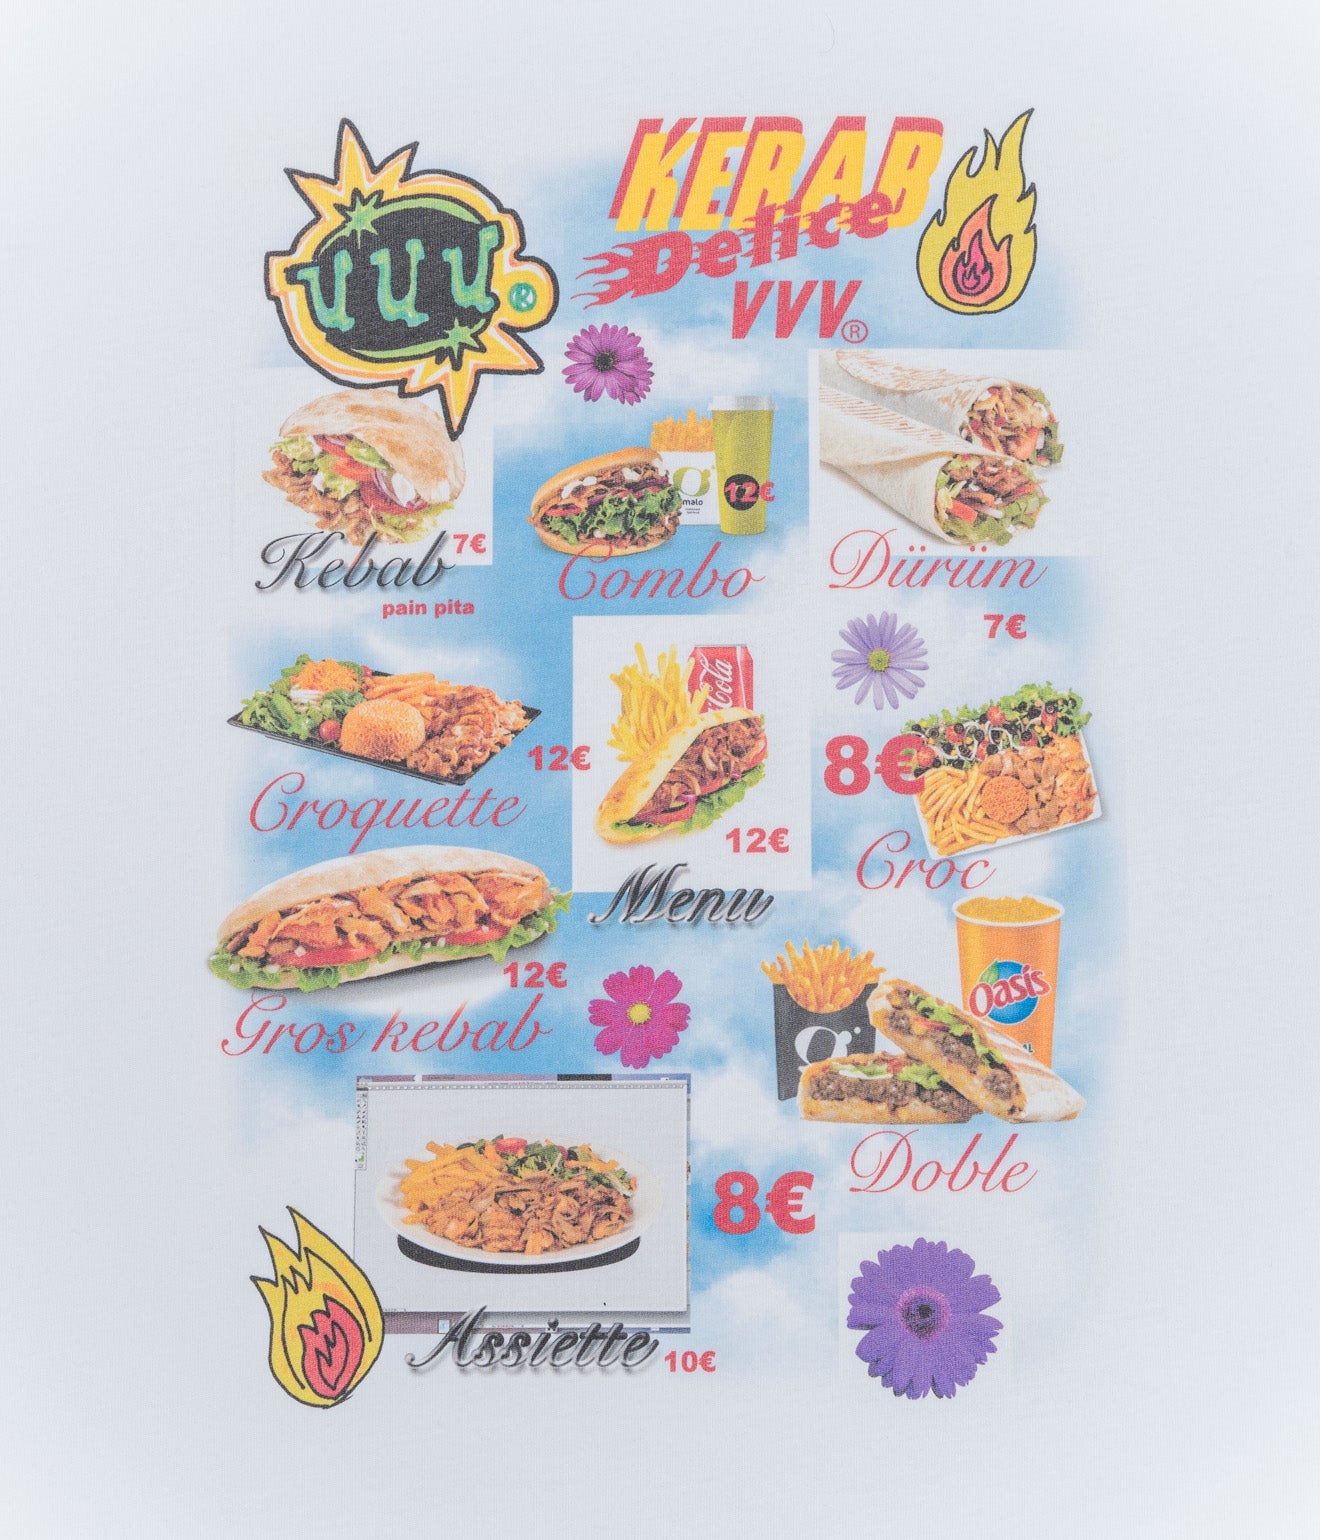 VVV "Kebab Delice S/S T-Shirt" - WEAREALLANIMALS